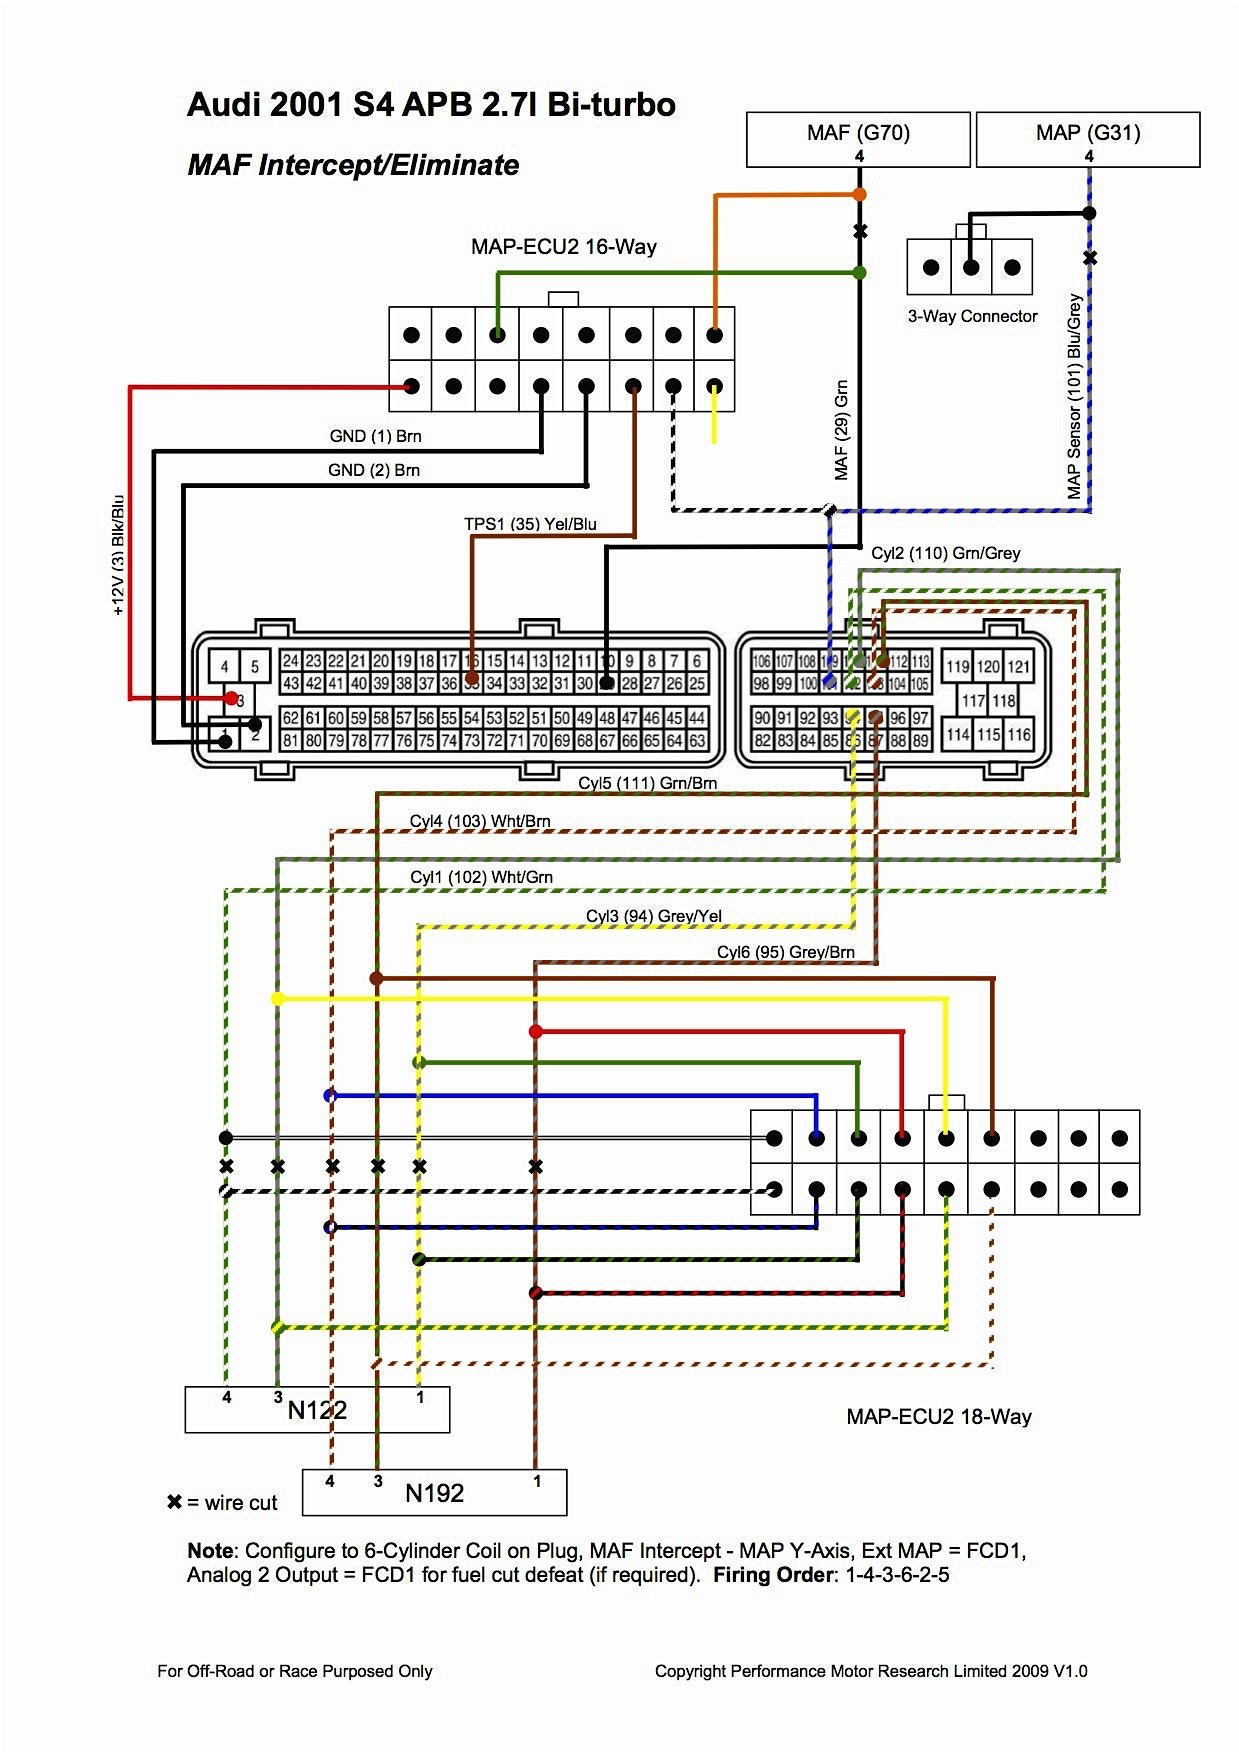 2000 Vw Passat Engine Diagram 1999 Jetta Radio Wiring Diagram Worksheet and Wiring Diagram • Of 2000 Vw Passat Engine Diagram